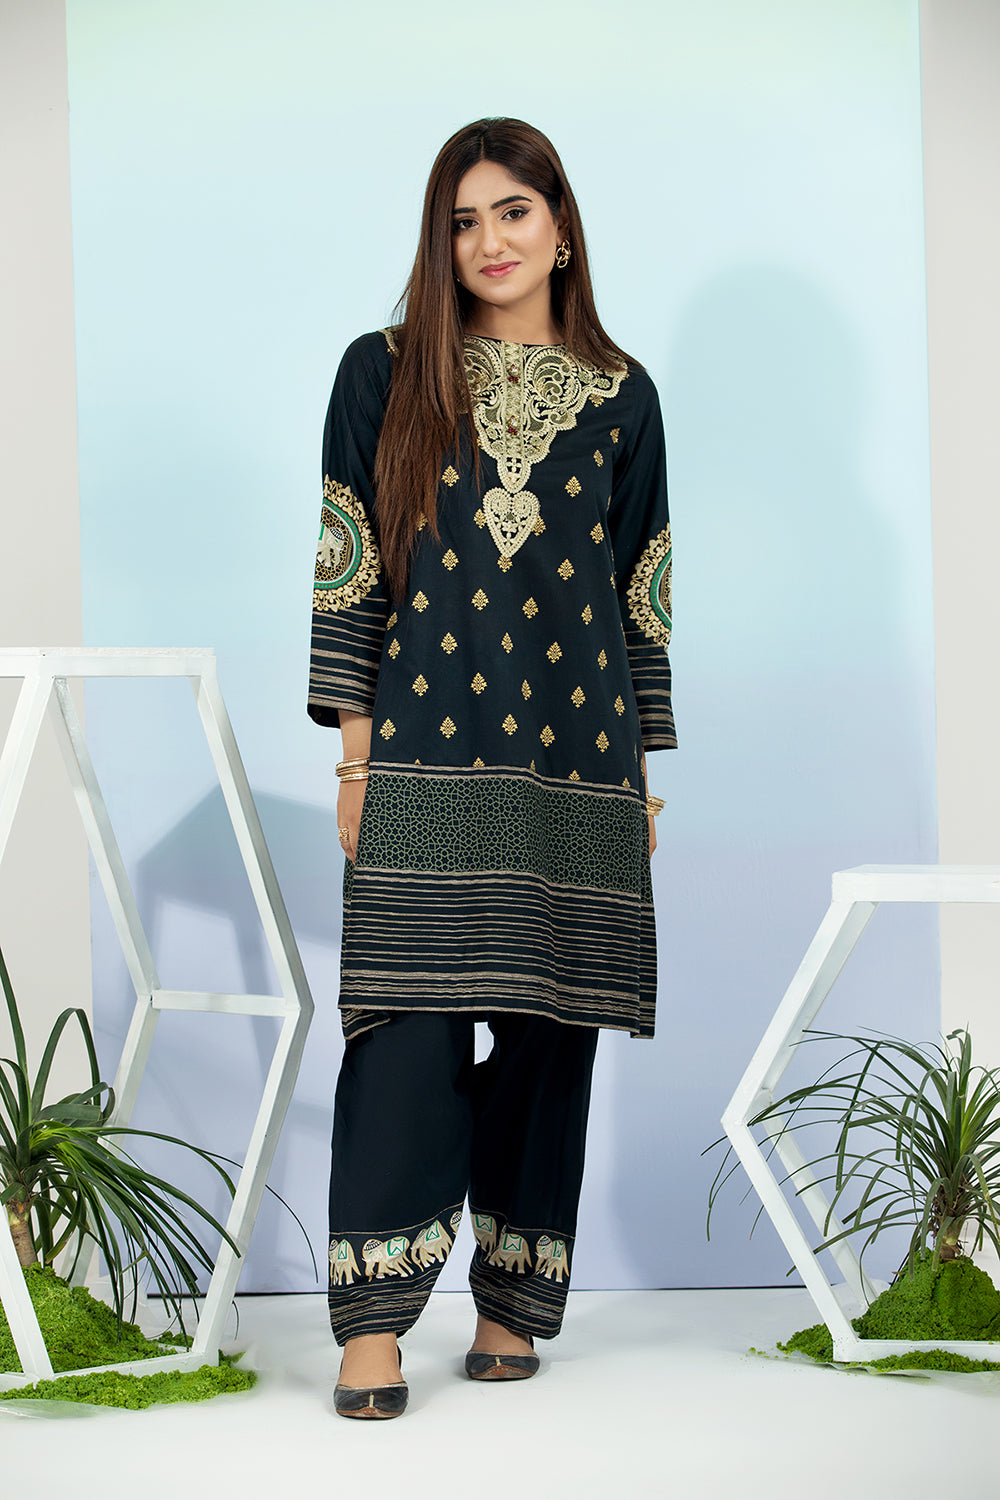 Explore the Elegant Style Of Pakistani Women's Fashion In